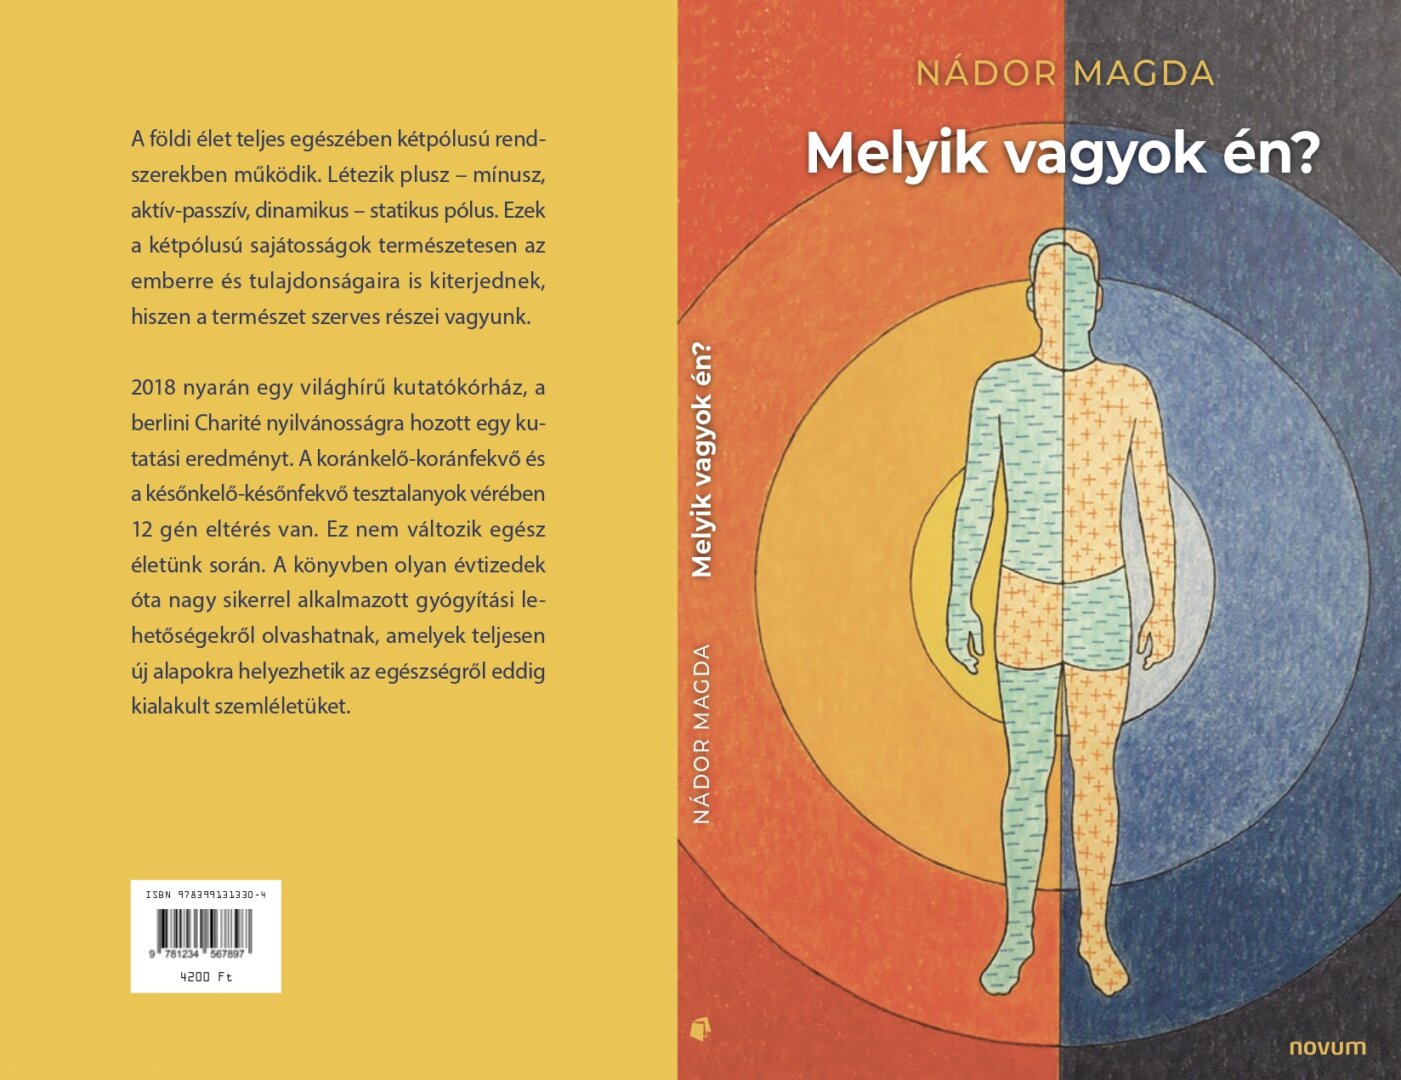 Nádor Magda-könyv